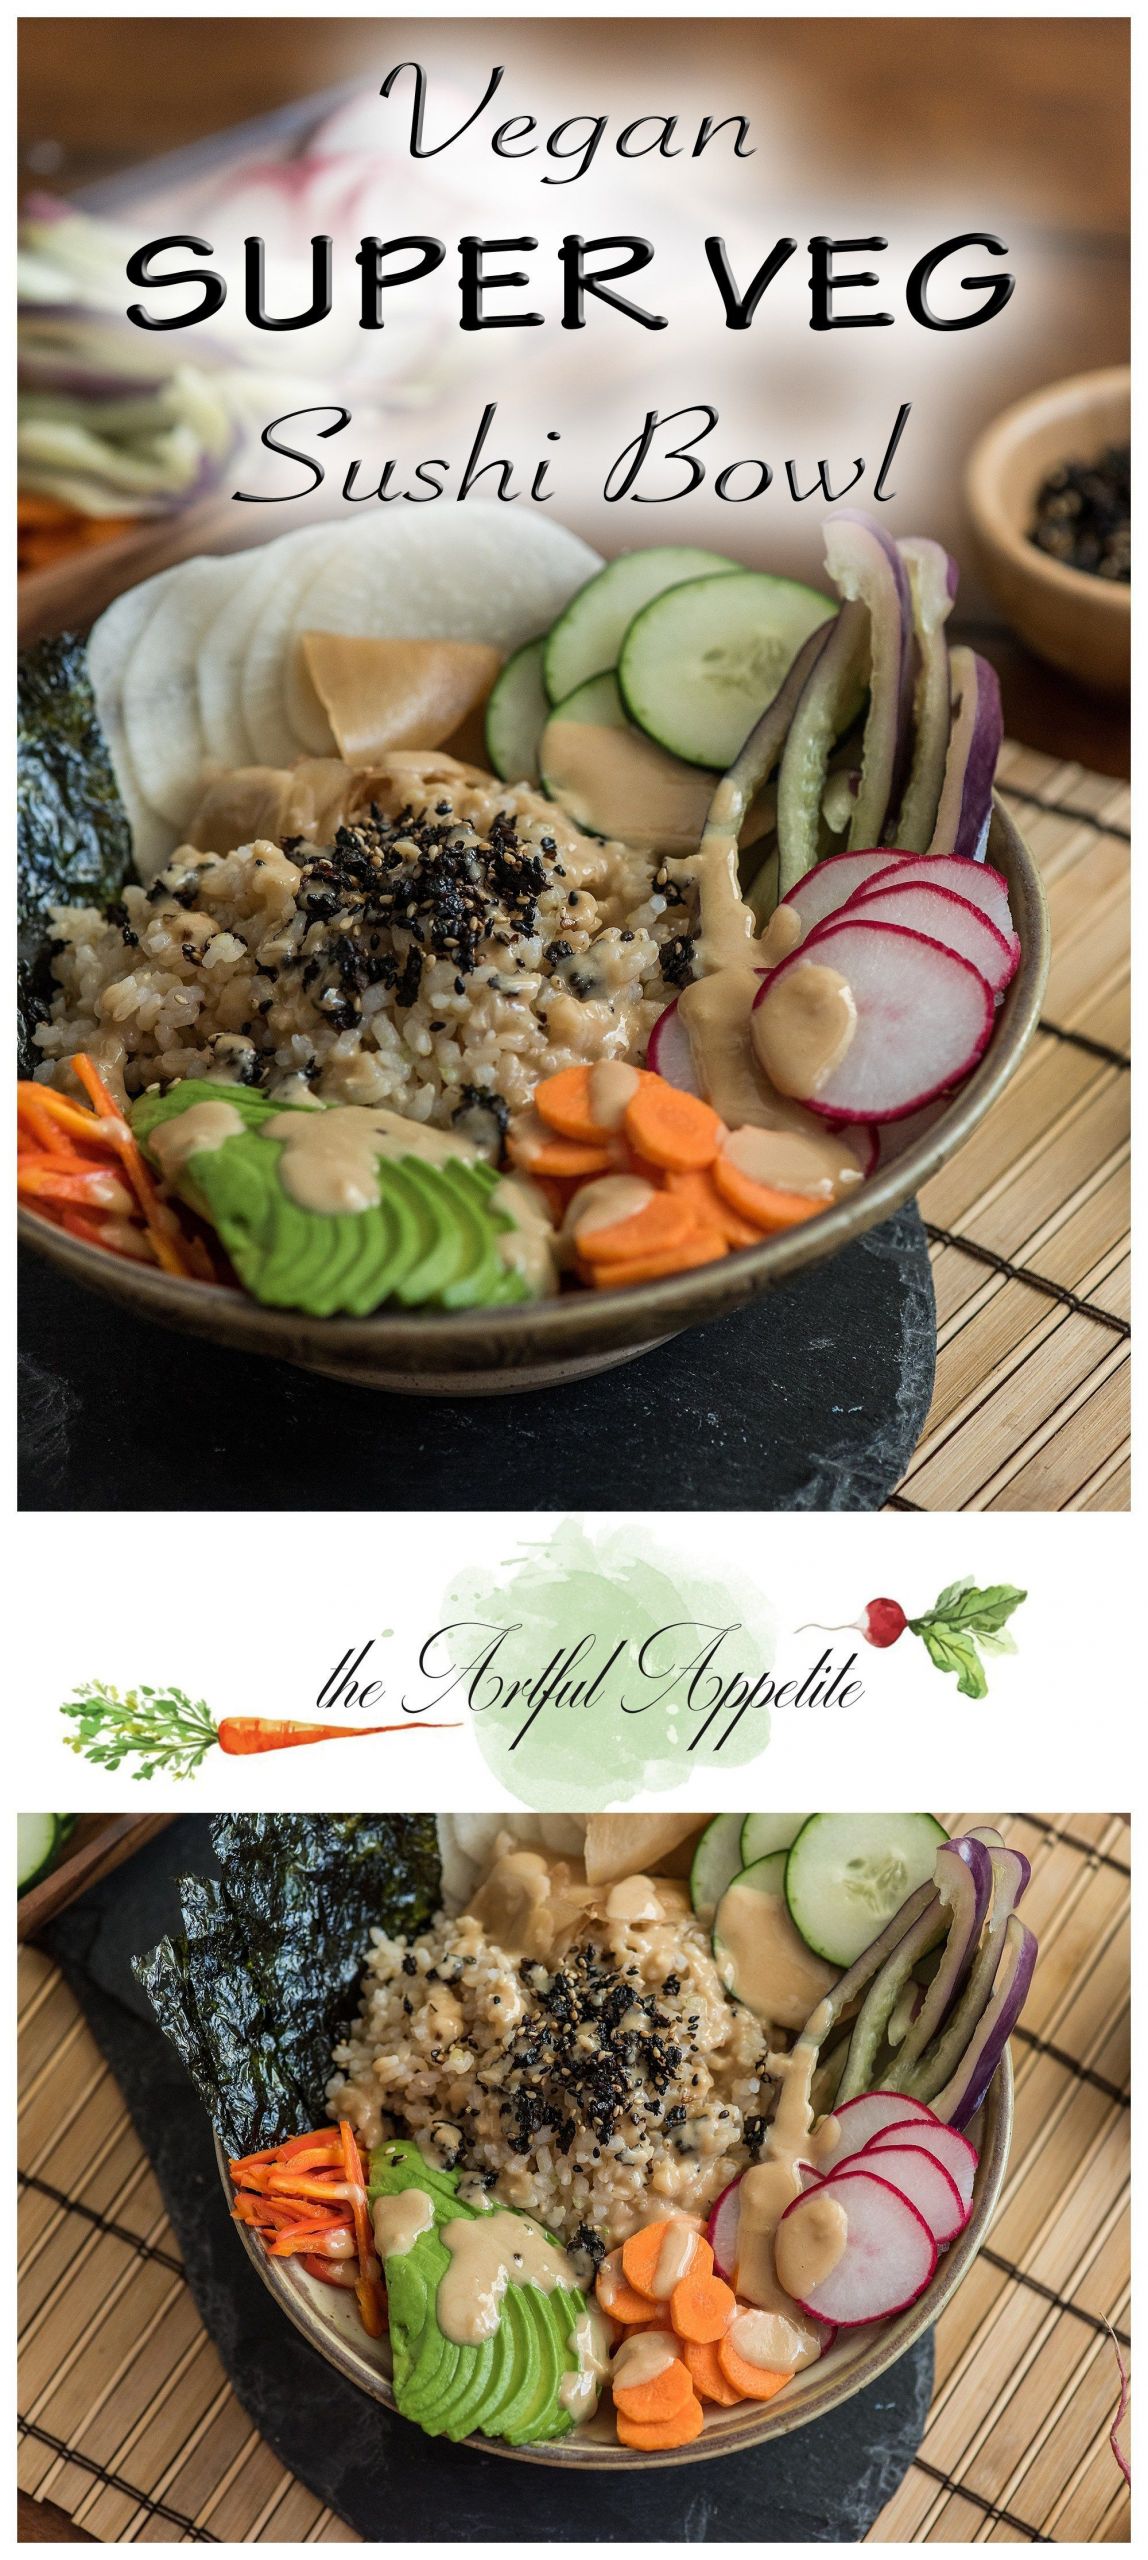 Super Bowl Veggie Recipes
 Vegan Super Veg Sushi Bowl Recipe